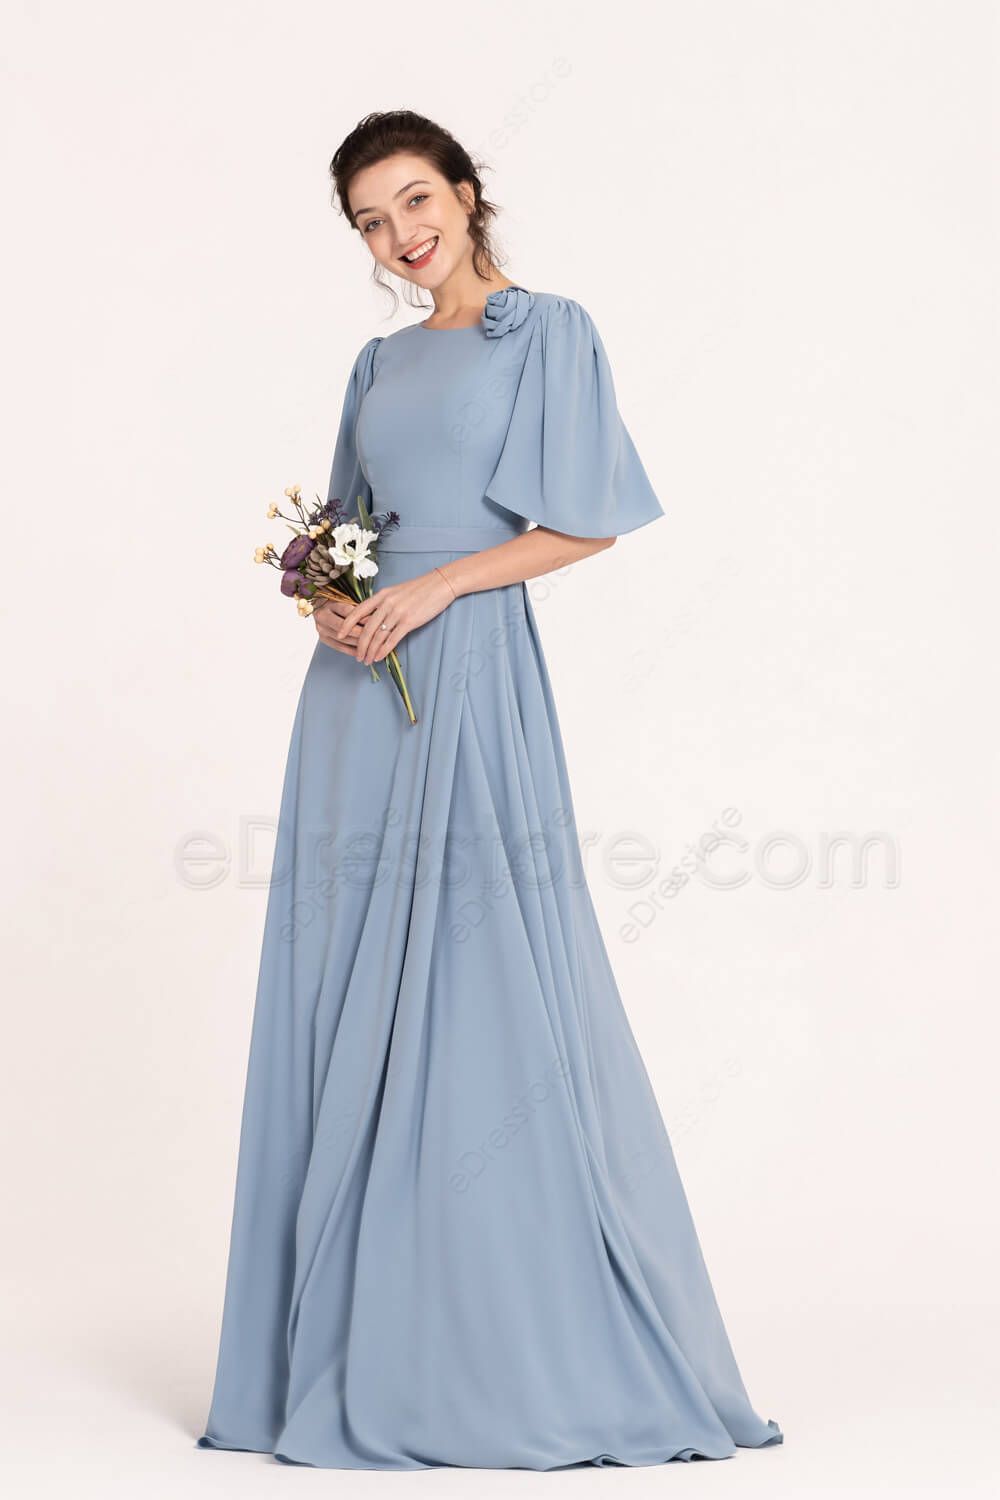 Steel Blue Modest Bridesmaid Dresses with Elbow Sleeves | eDresstore